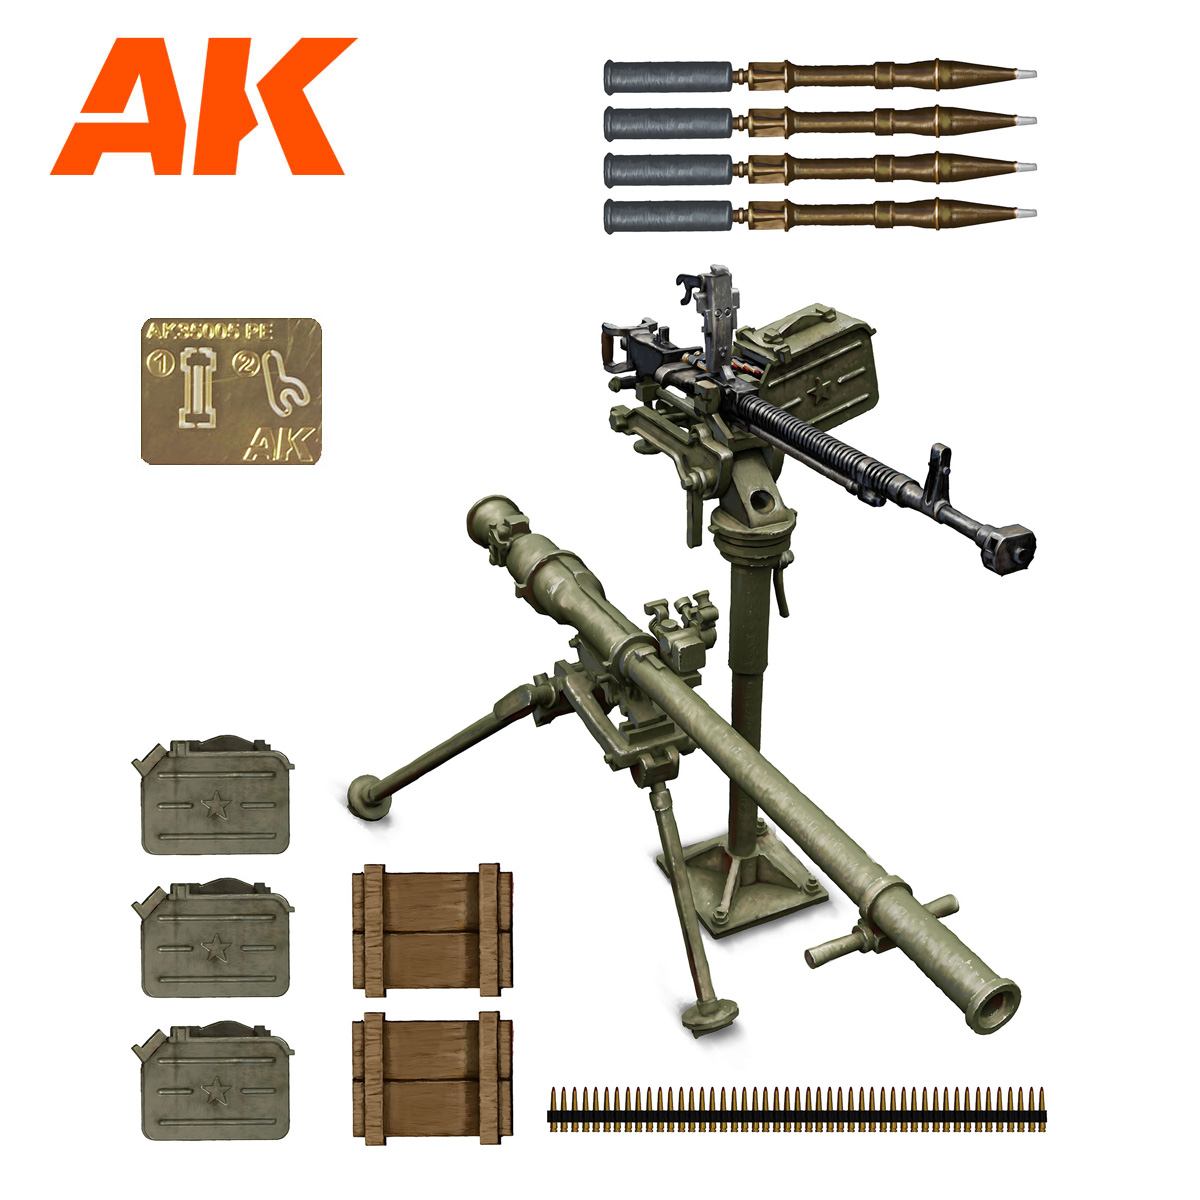 Infantry Support Weapons DShKM & SPG-9